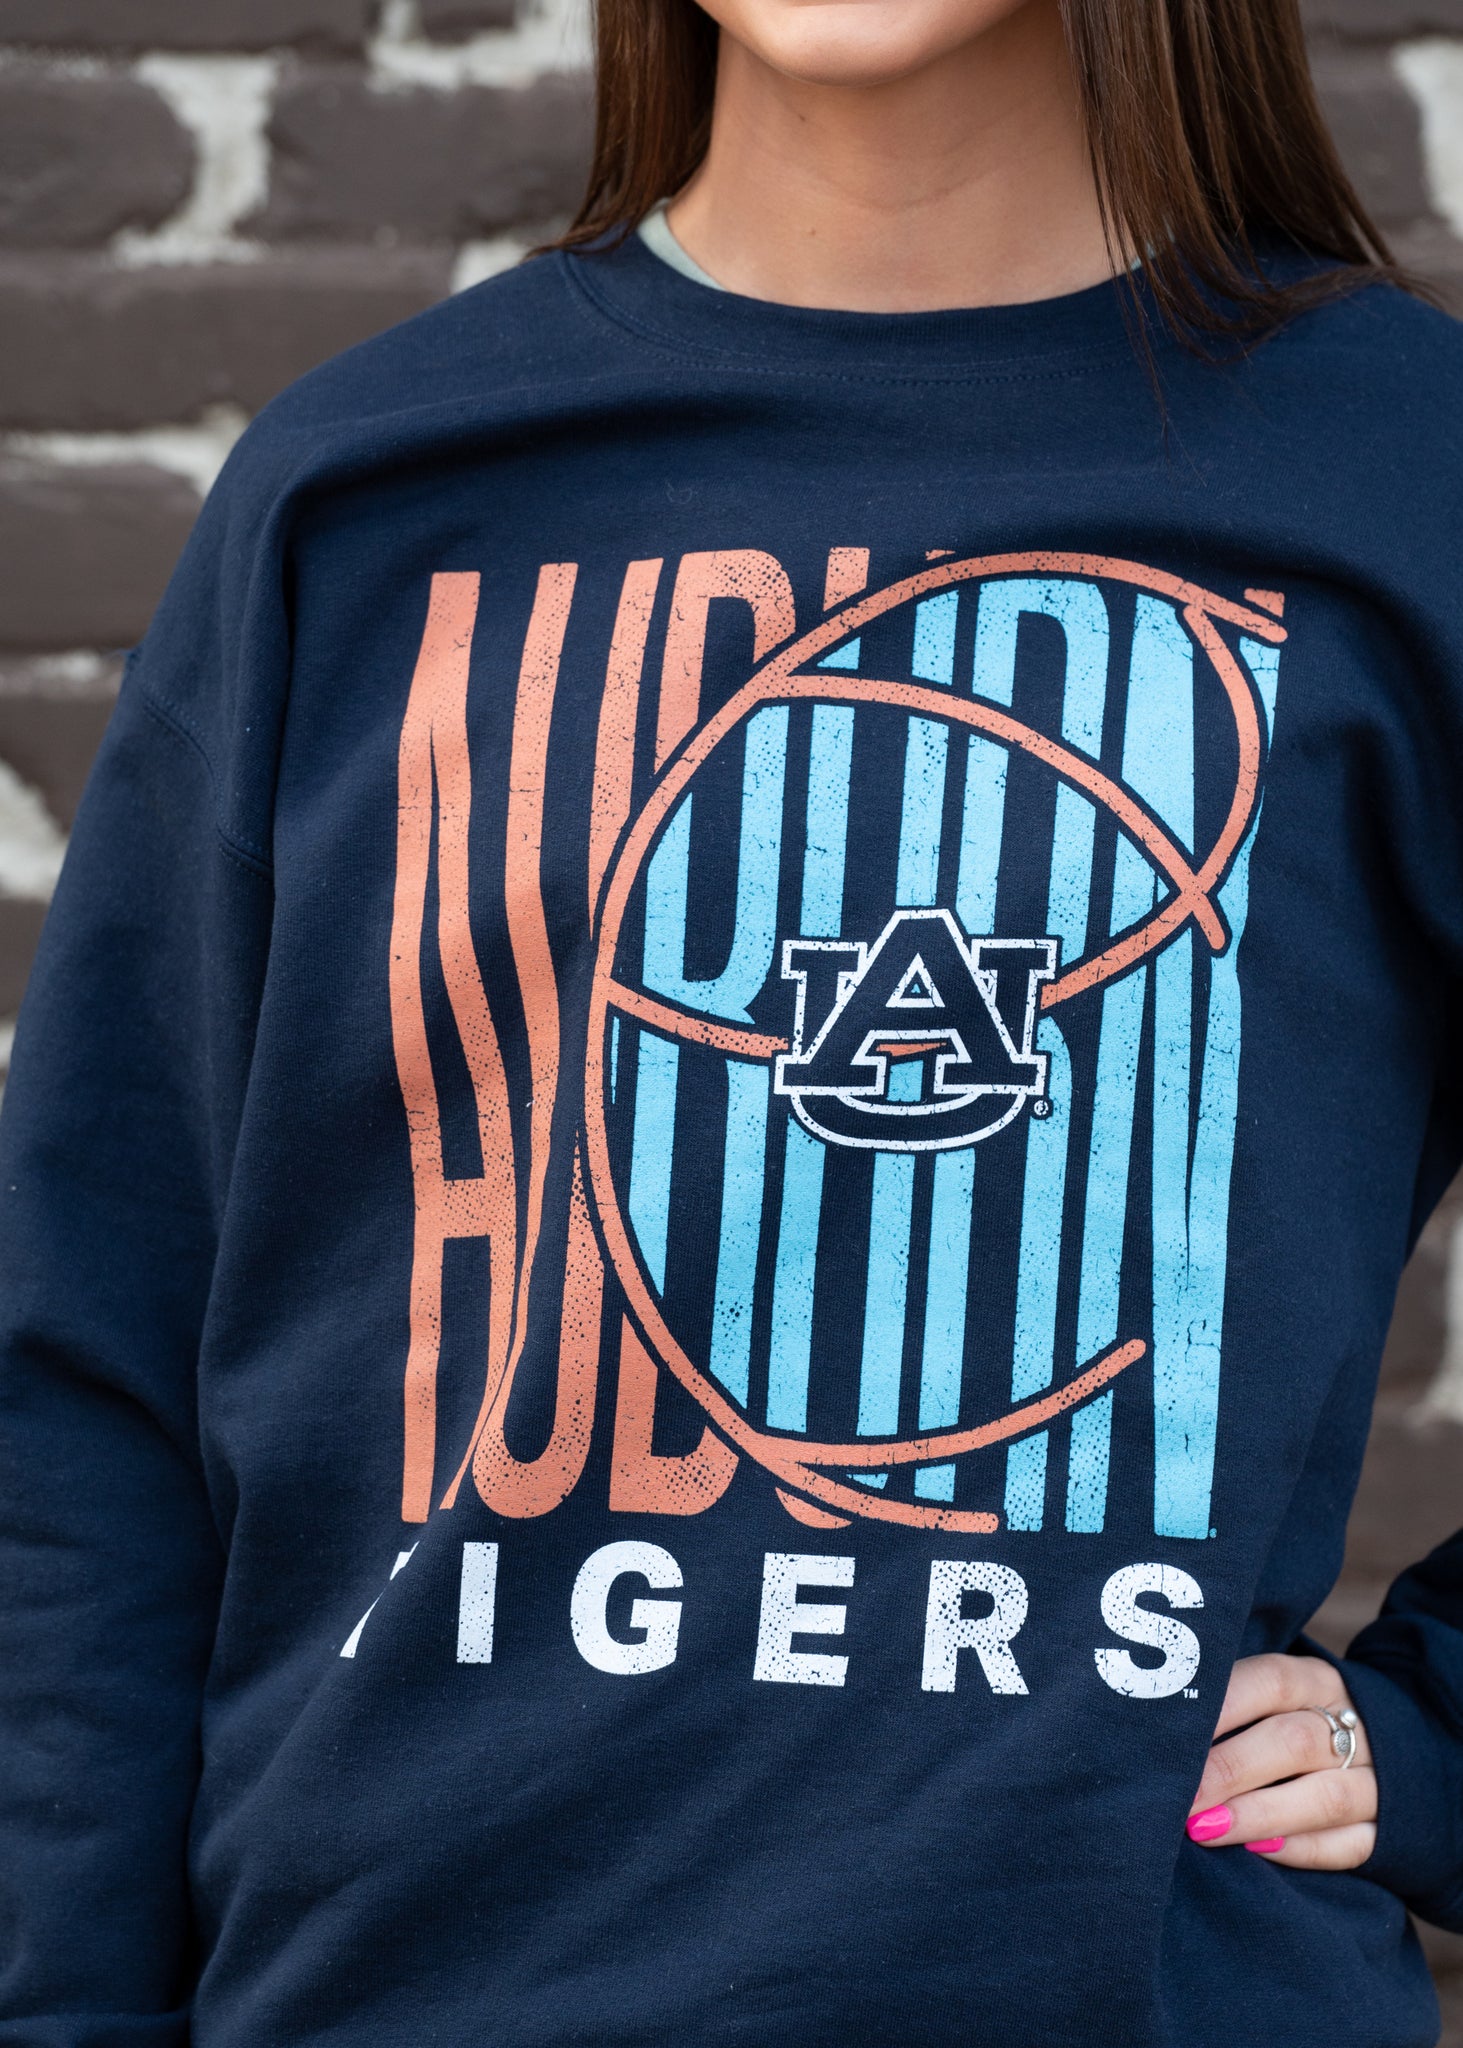 Auburn Basketball Sweatshirt - quick ship